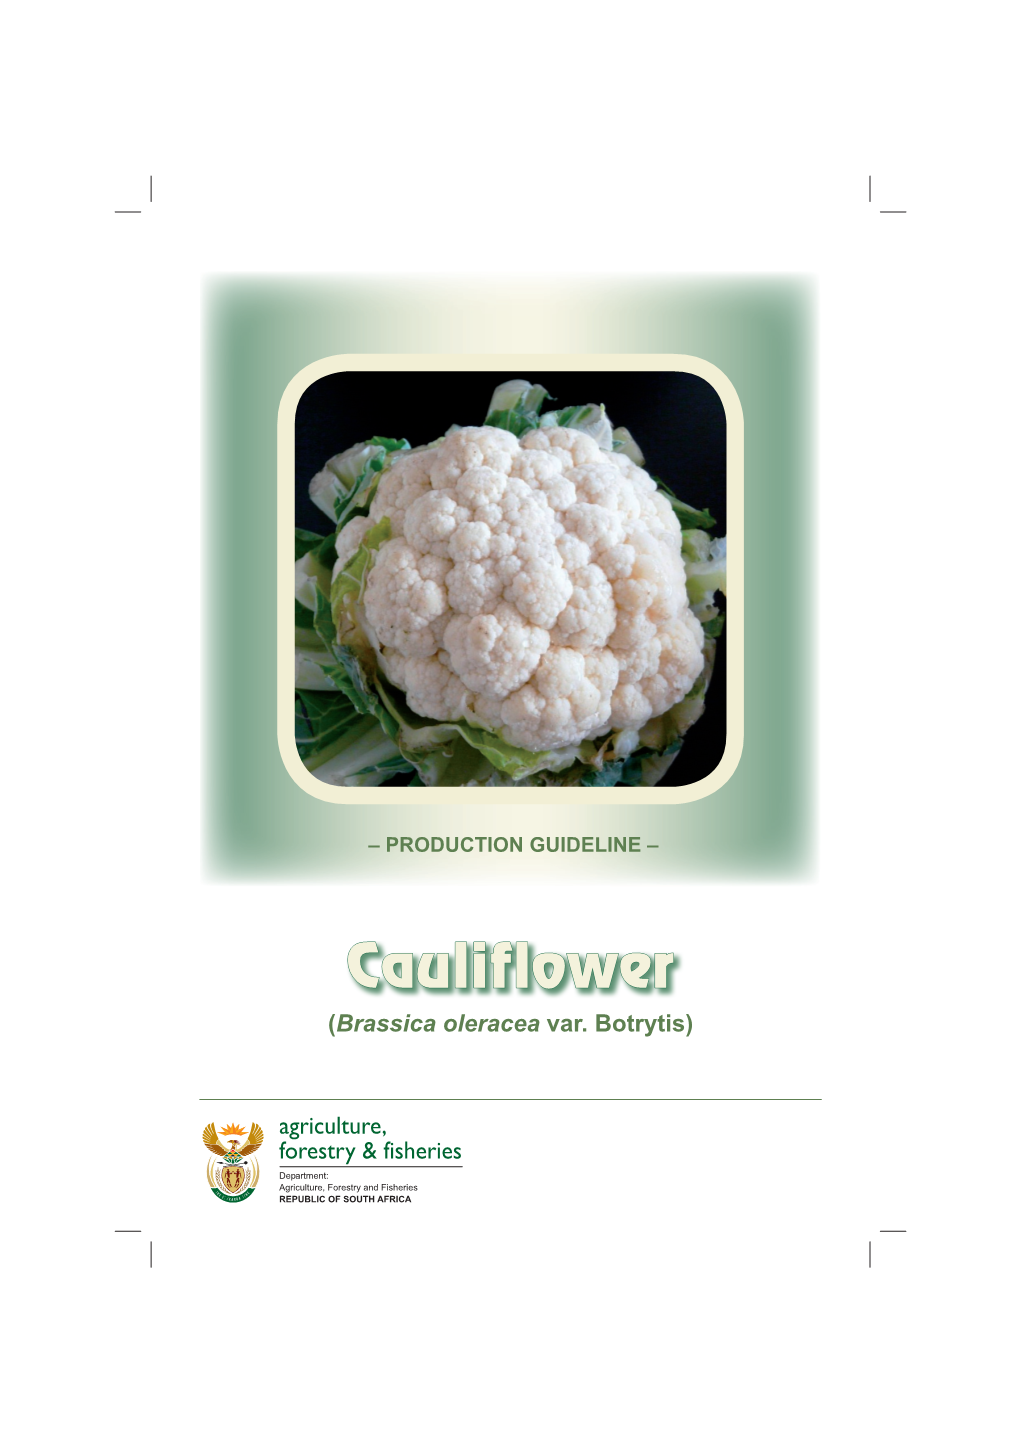 Cauliflower: Production Guideline